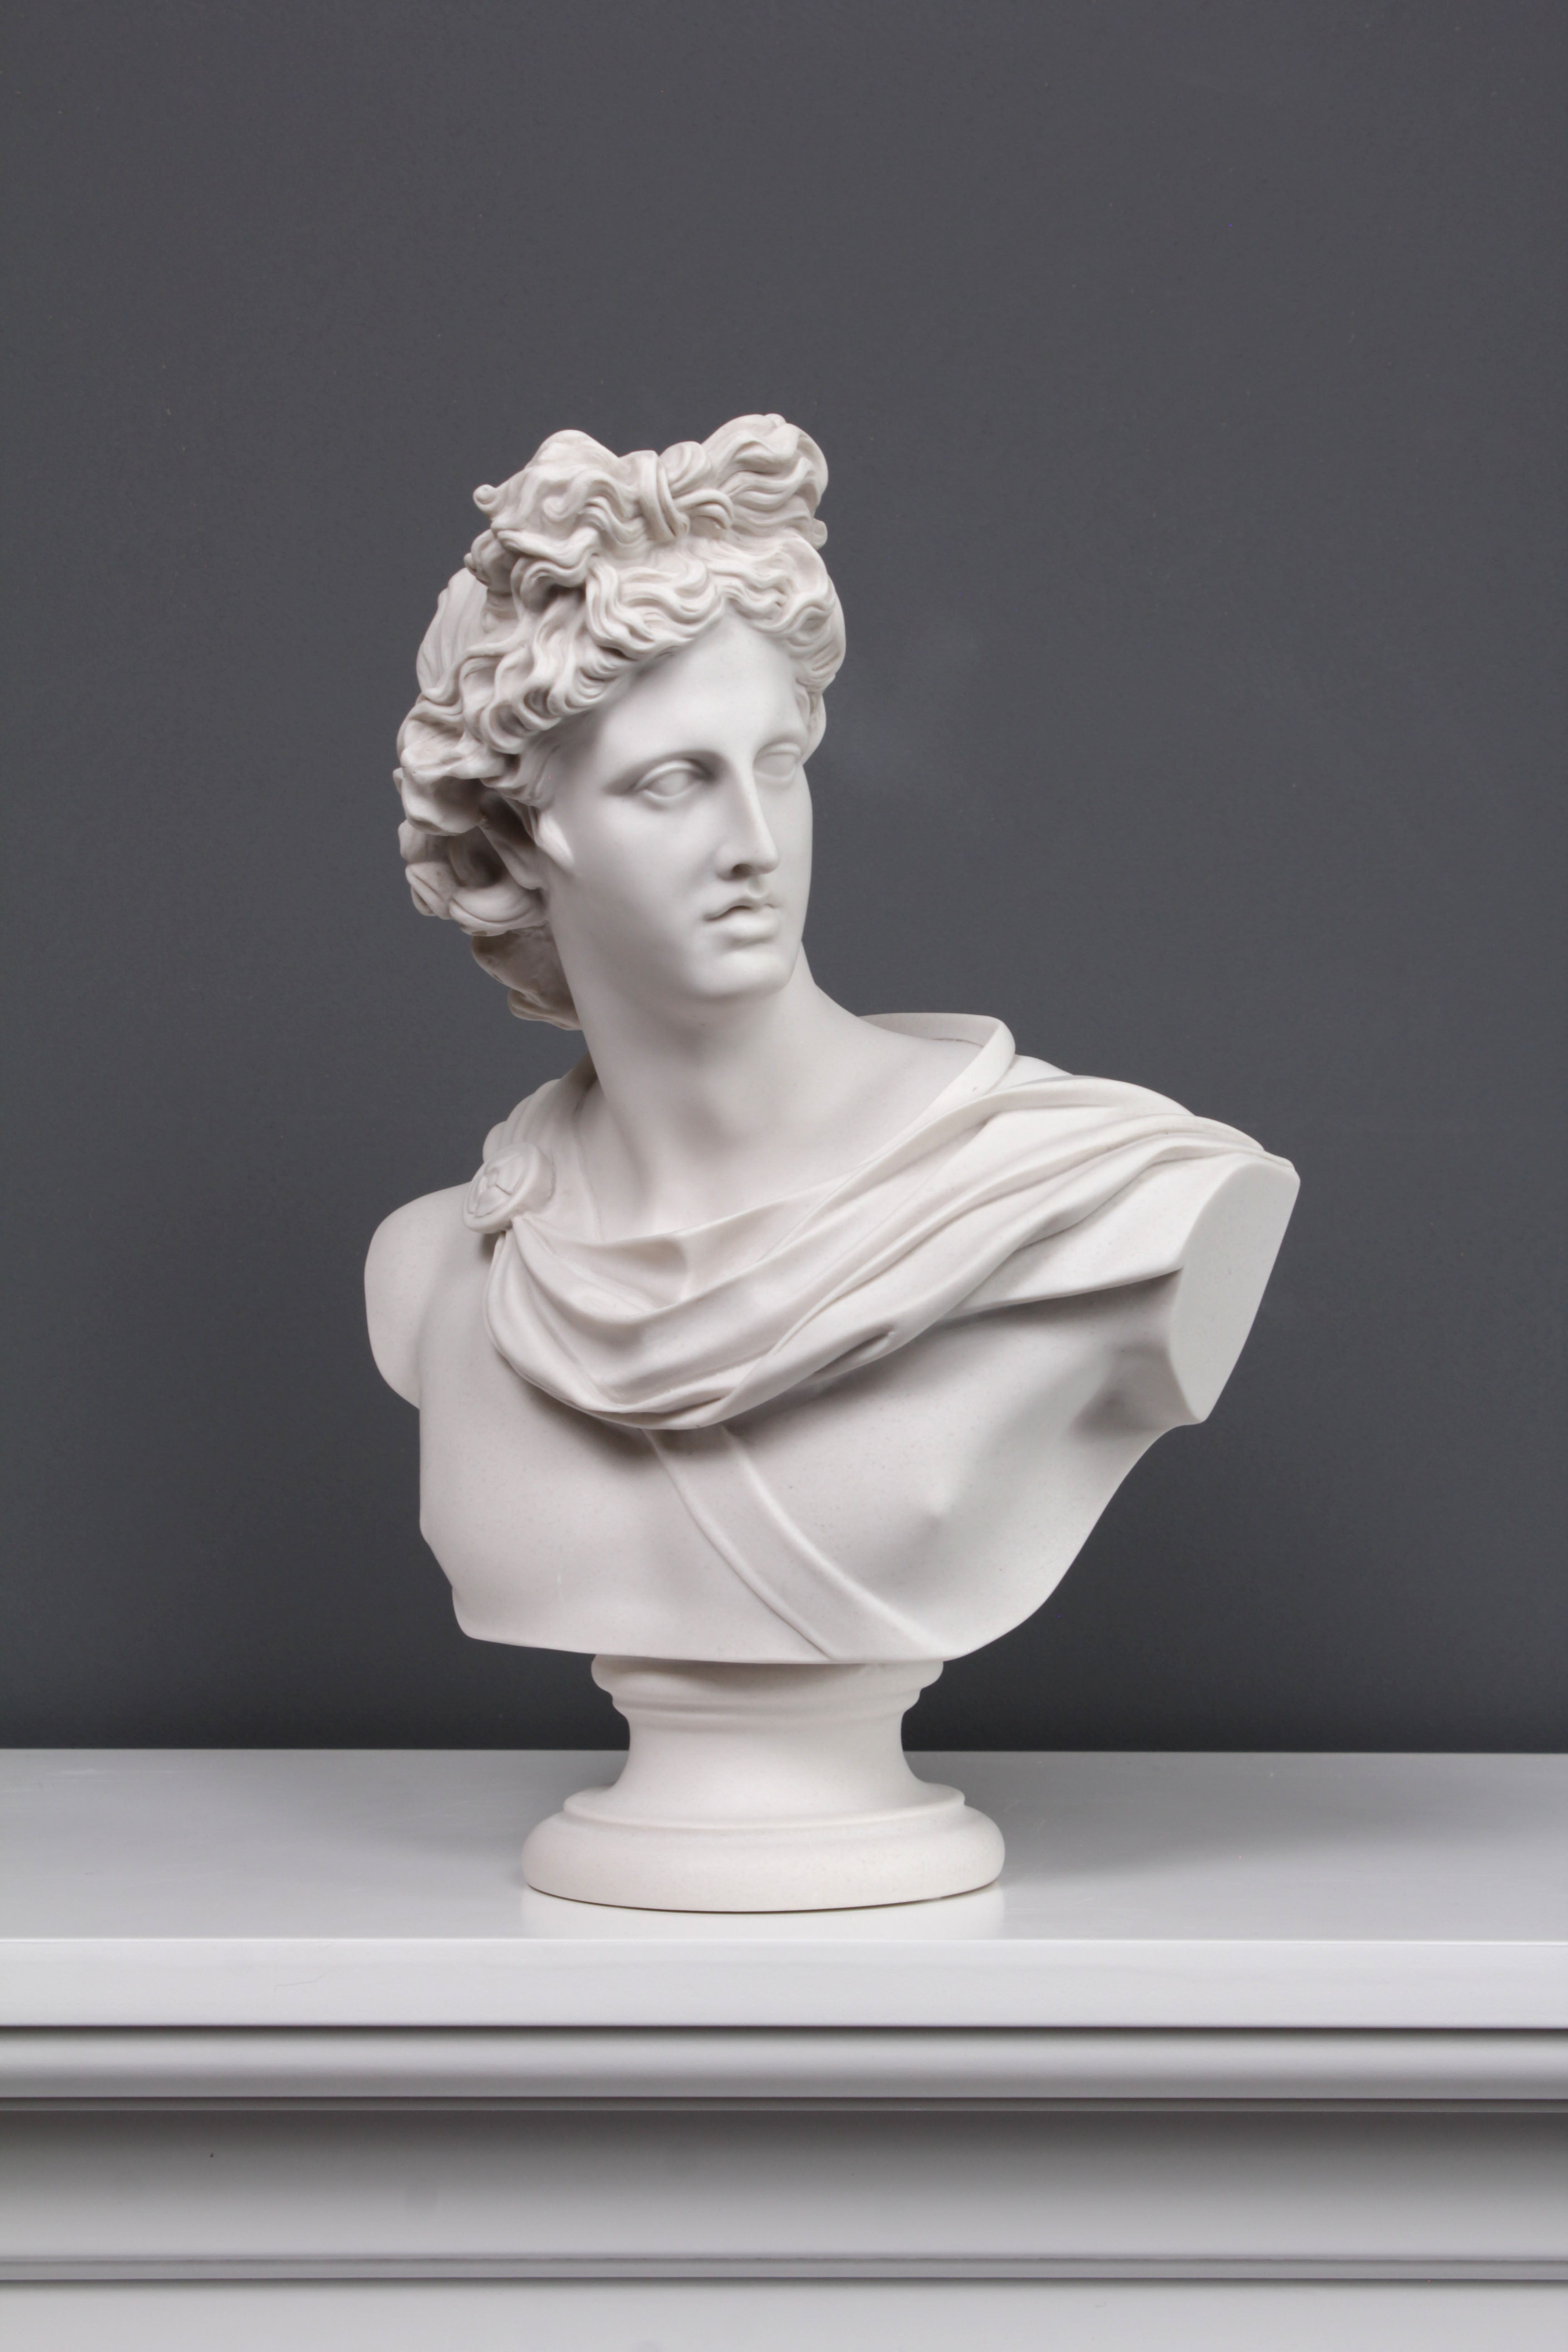  The Ancient Home - Apollo Bust Sculpture (Medium